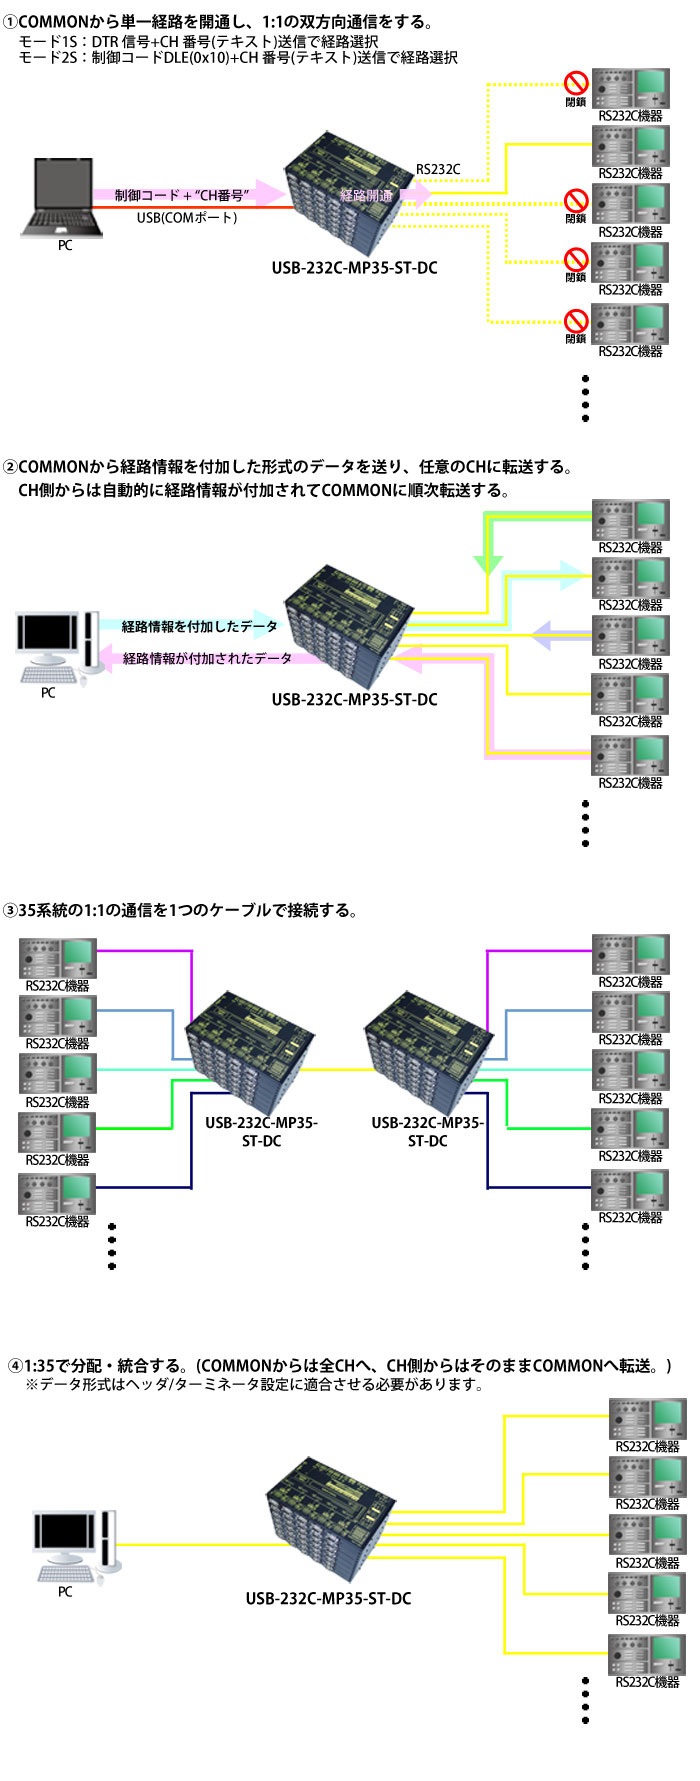 USB-232C-MP35-ST-DC接続例